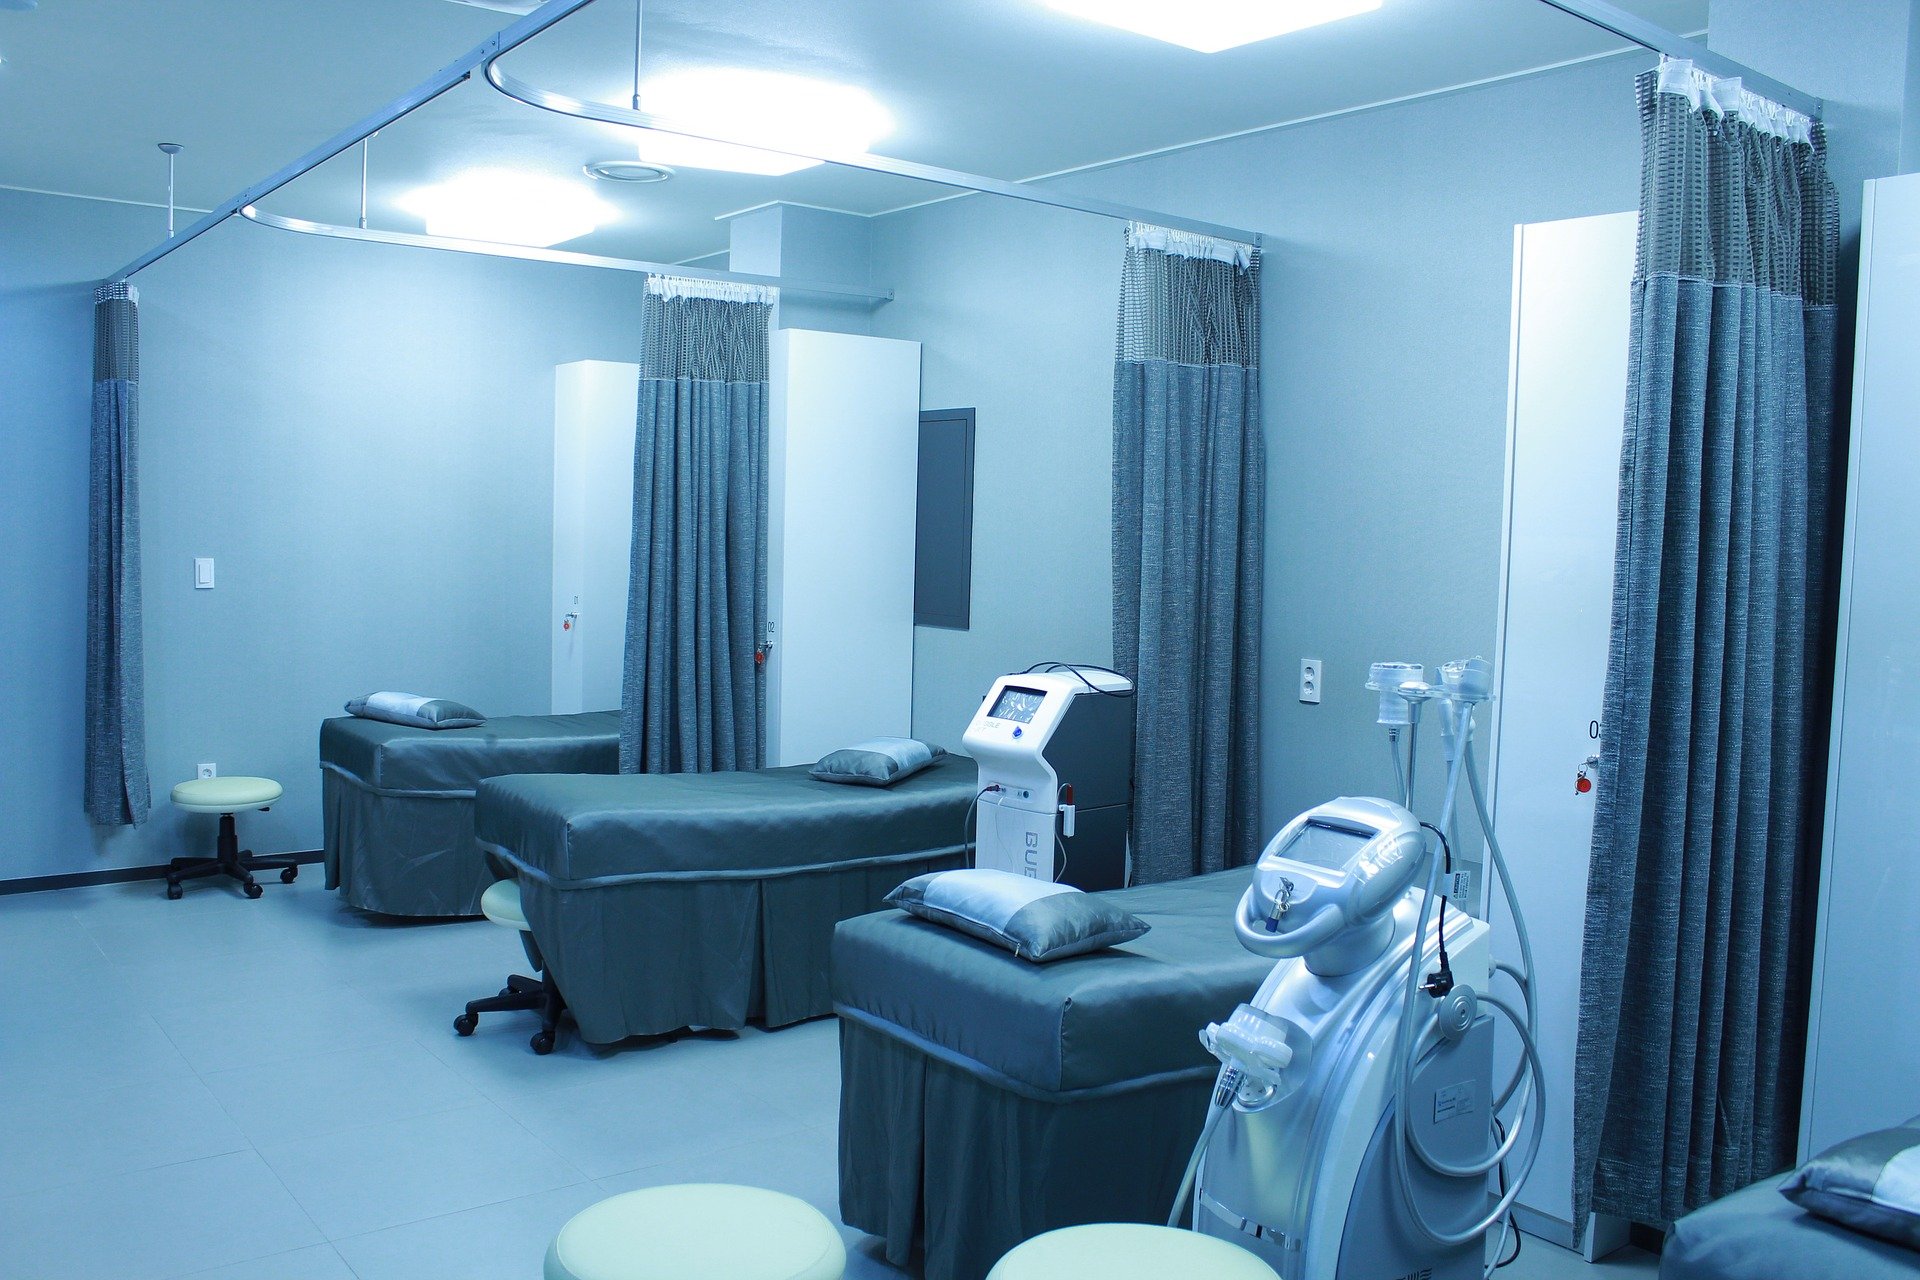 A hospital ward with several beds. | Source: Pixabay.com